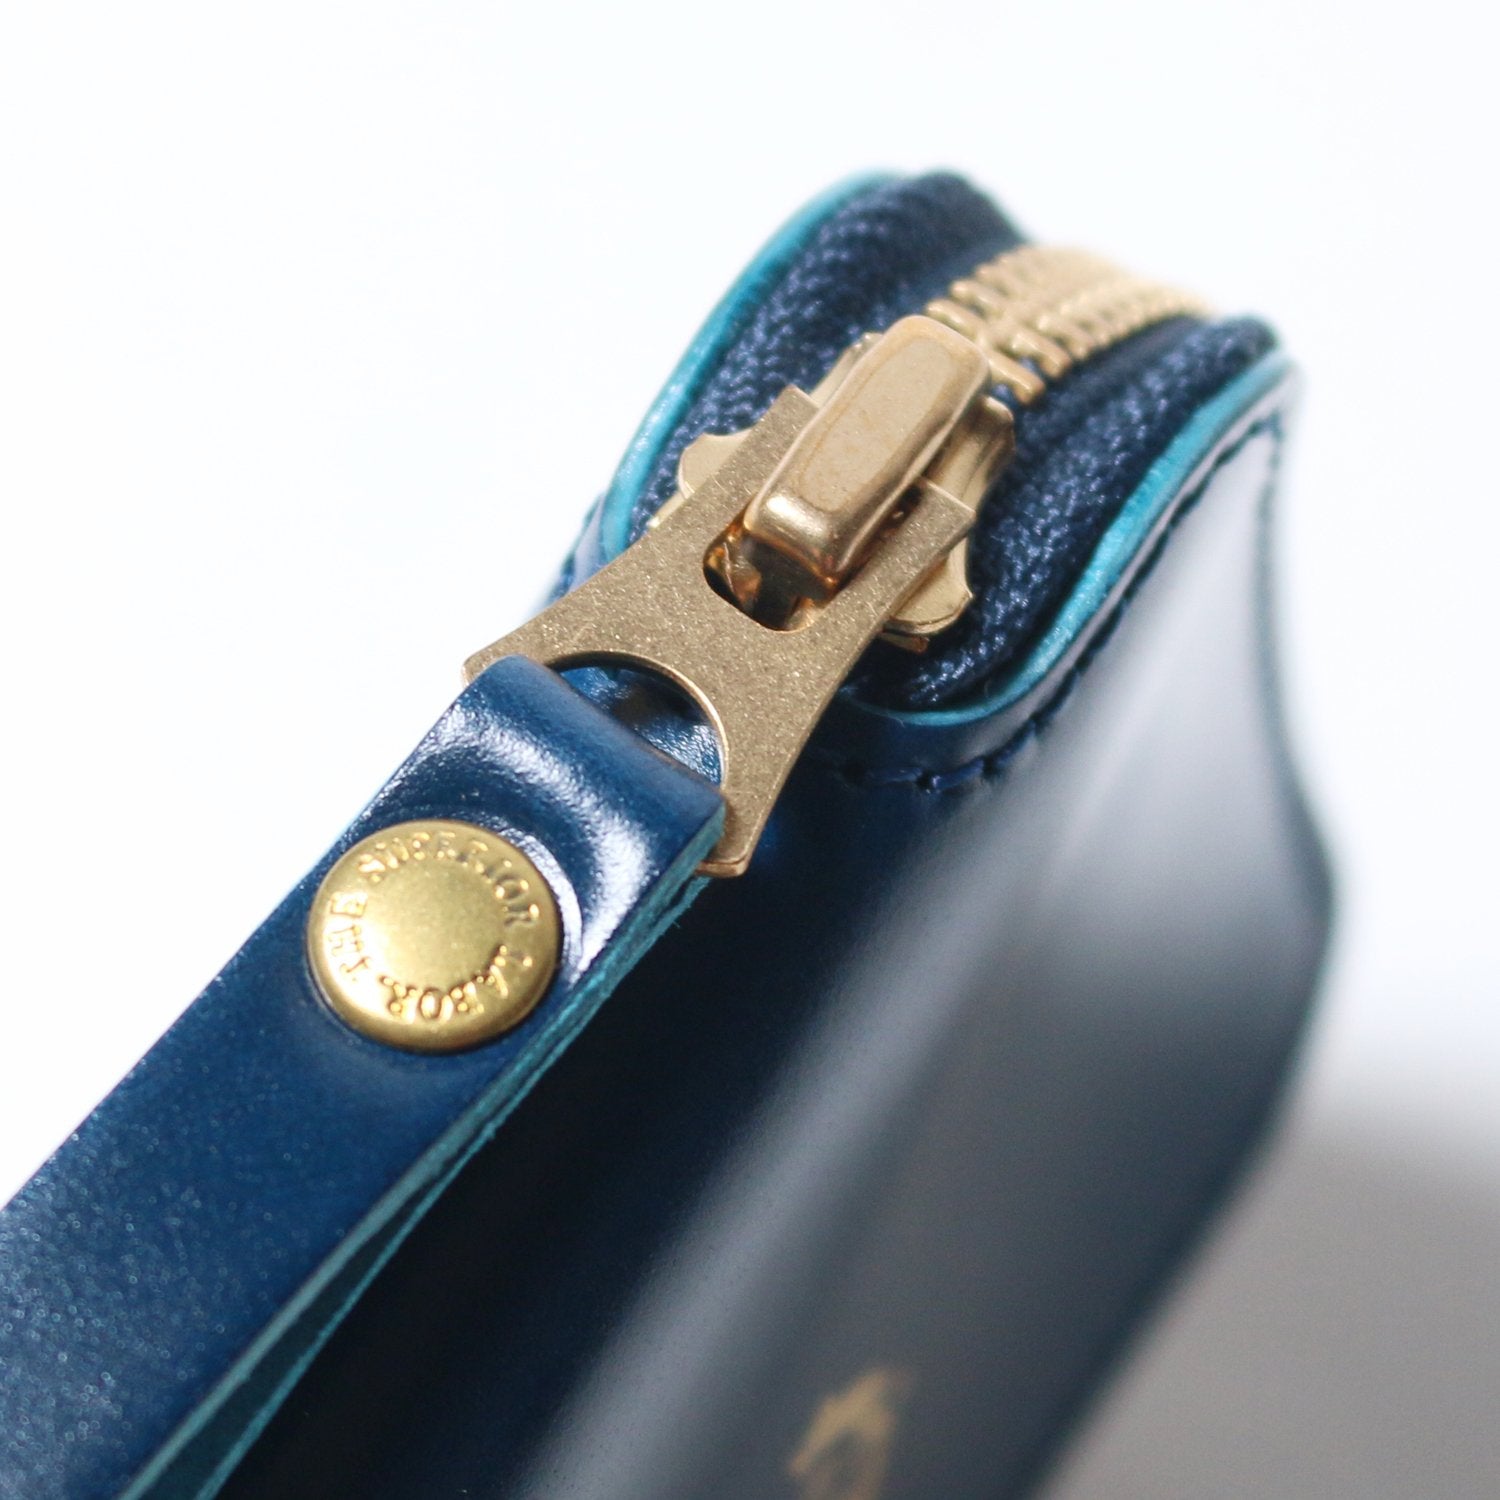 SL570  cordovan zip pen case